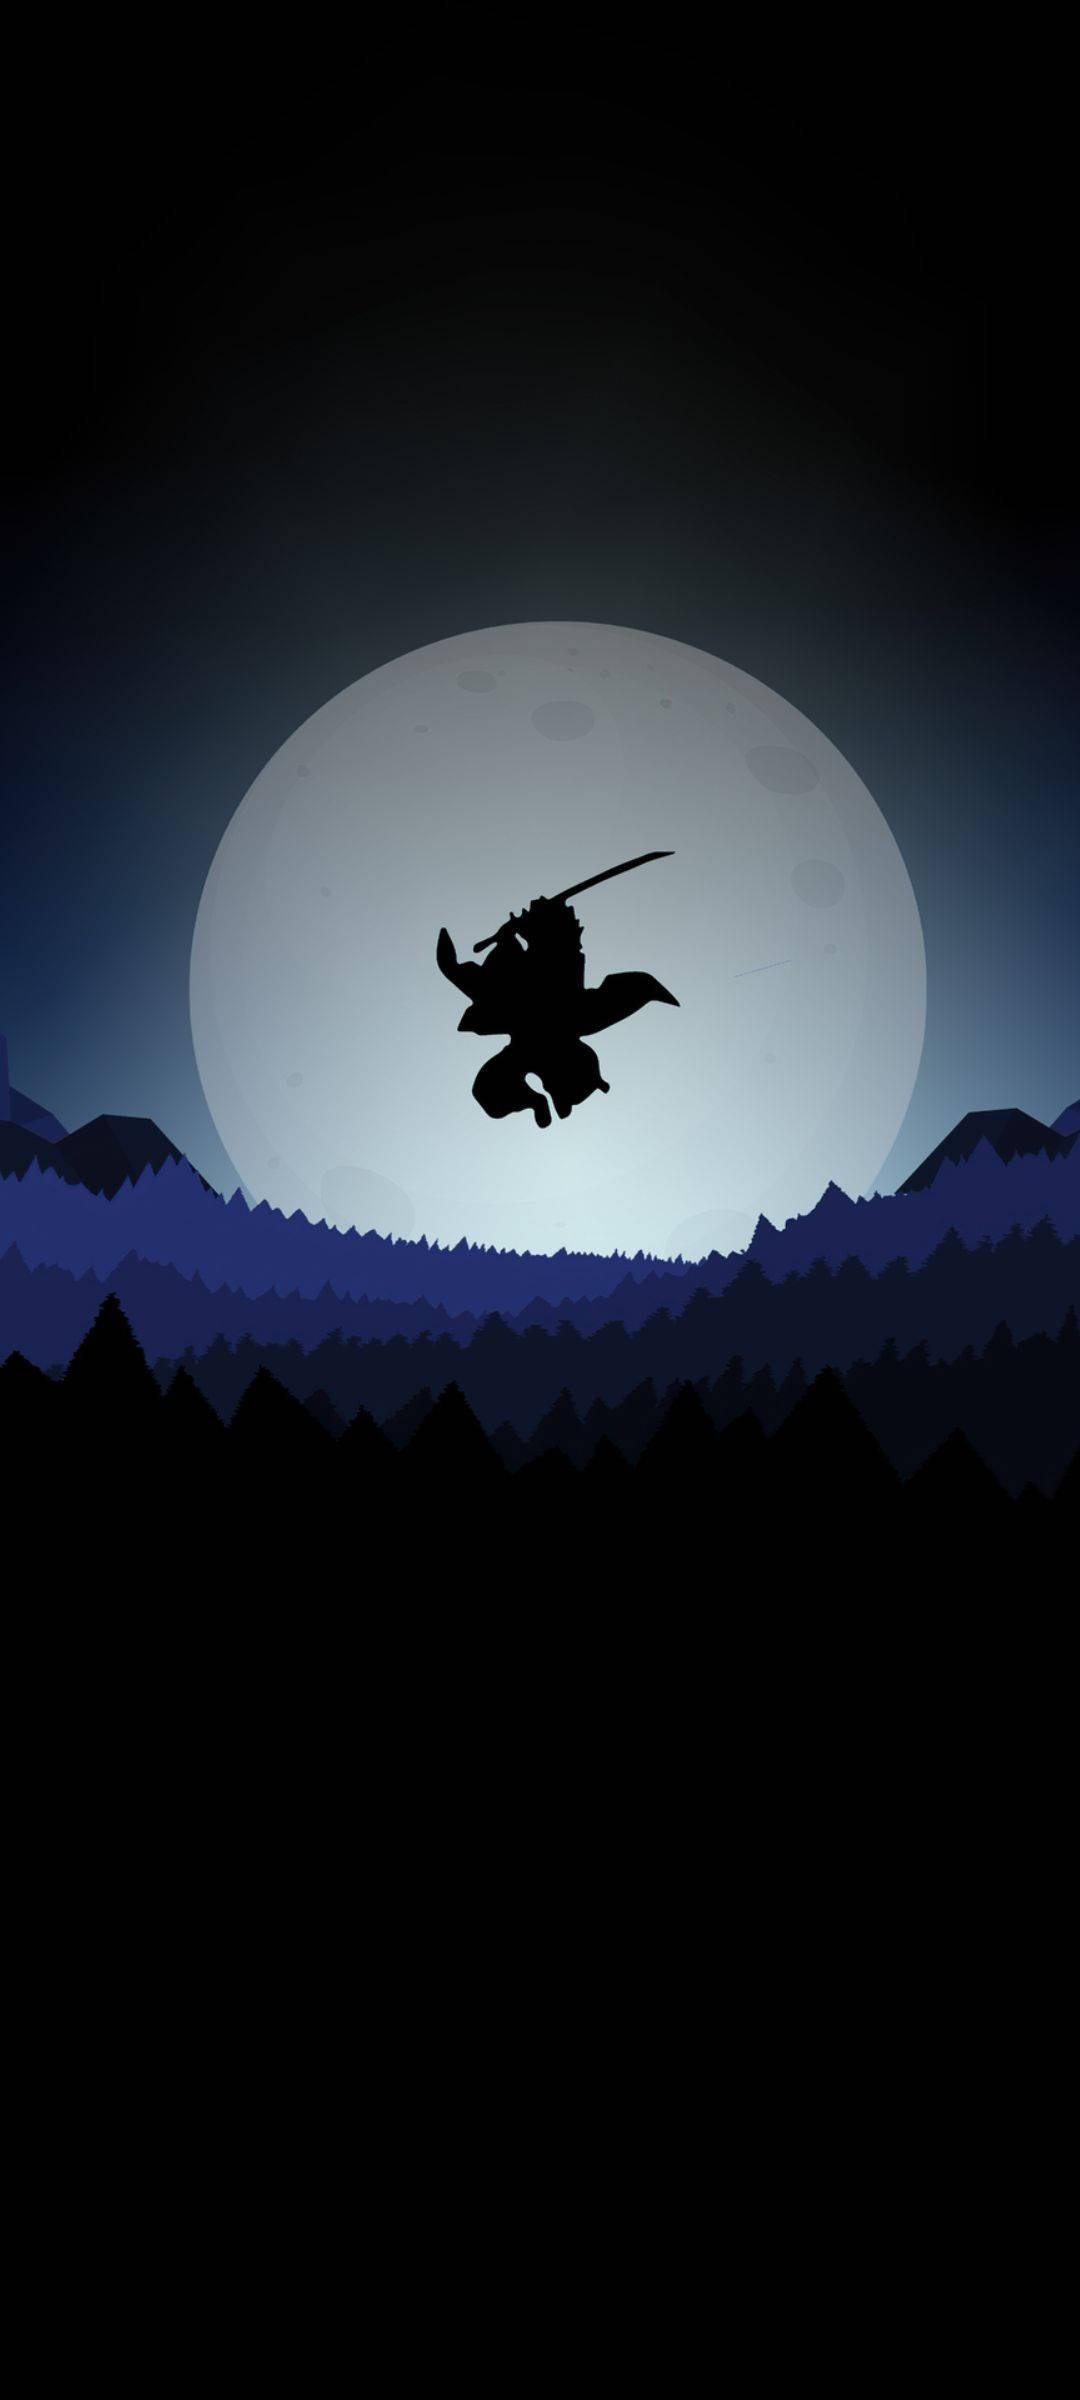 Enigmatic Ninja Underneath The Moonlight - Cool Anime Phone Wallpaper Wallpaper